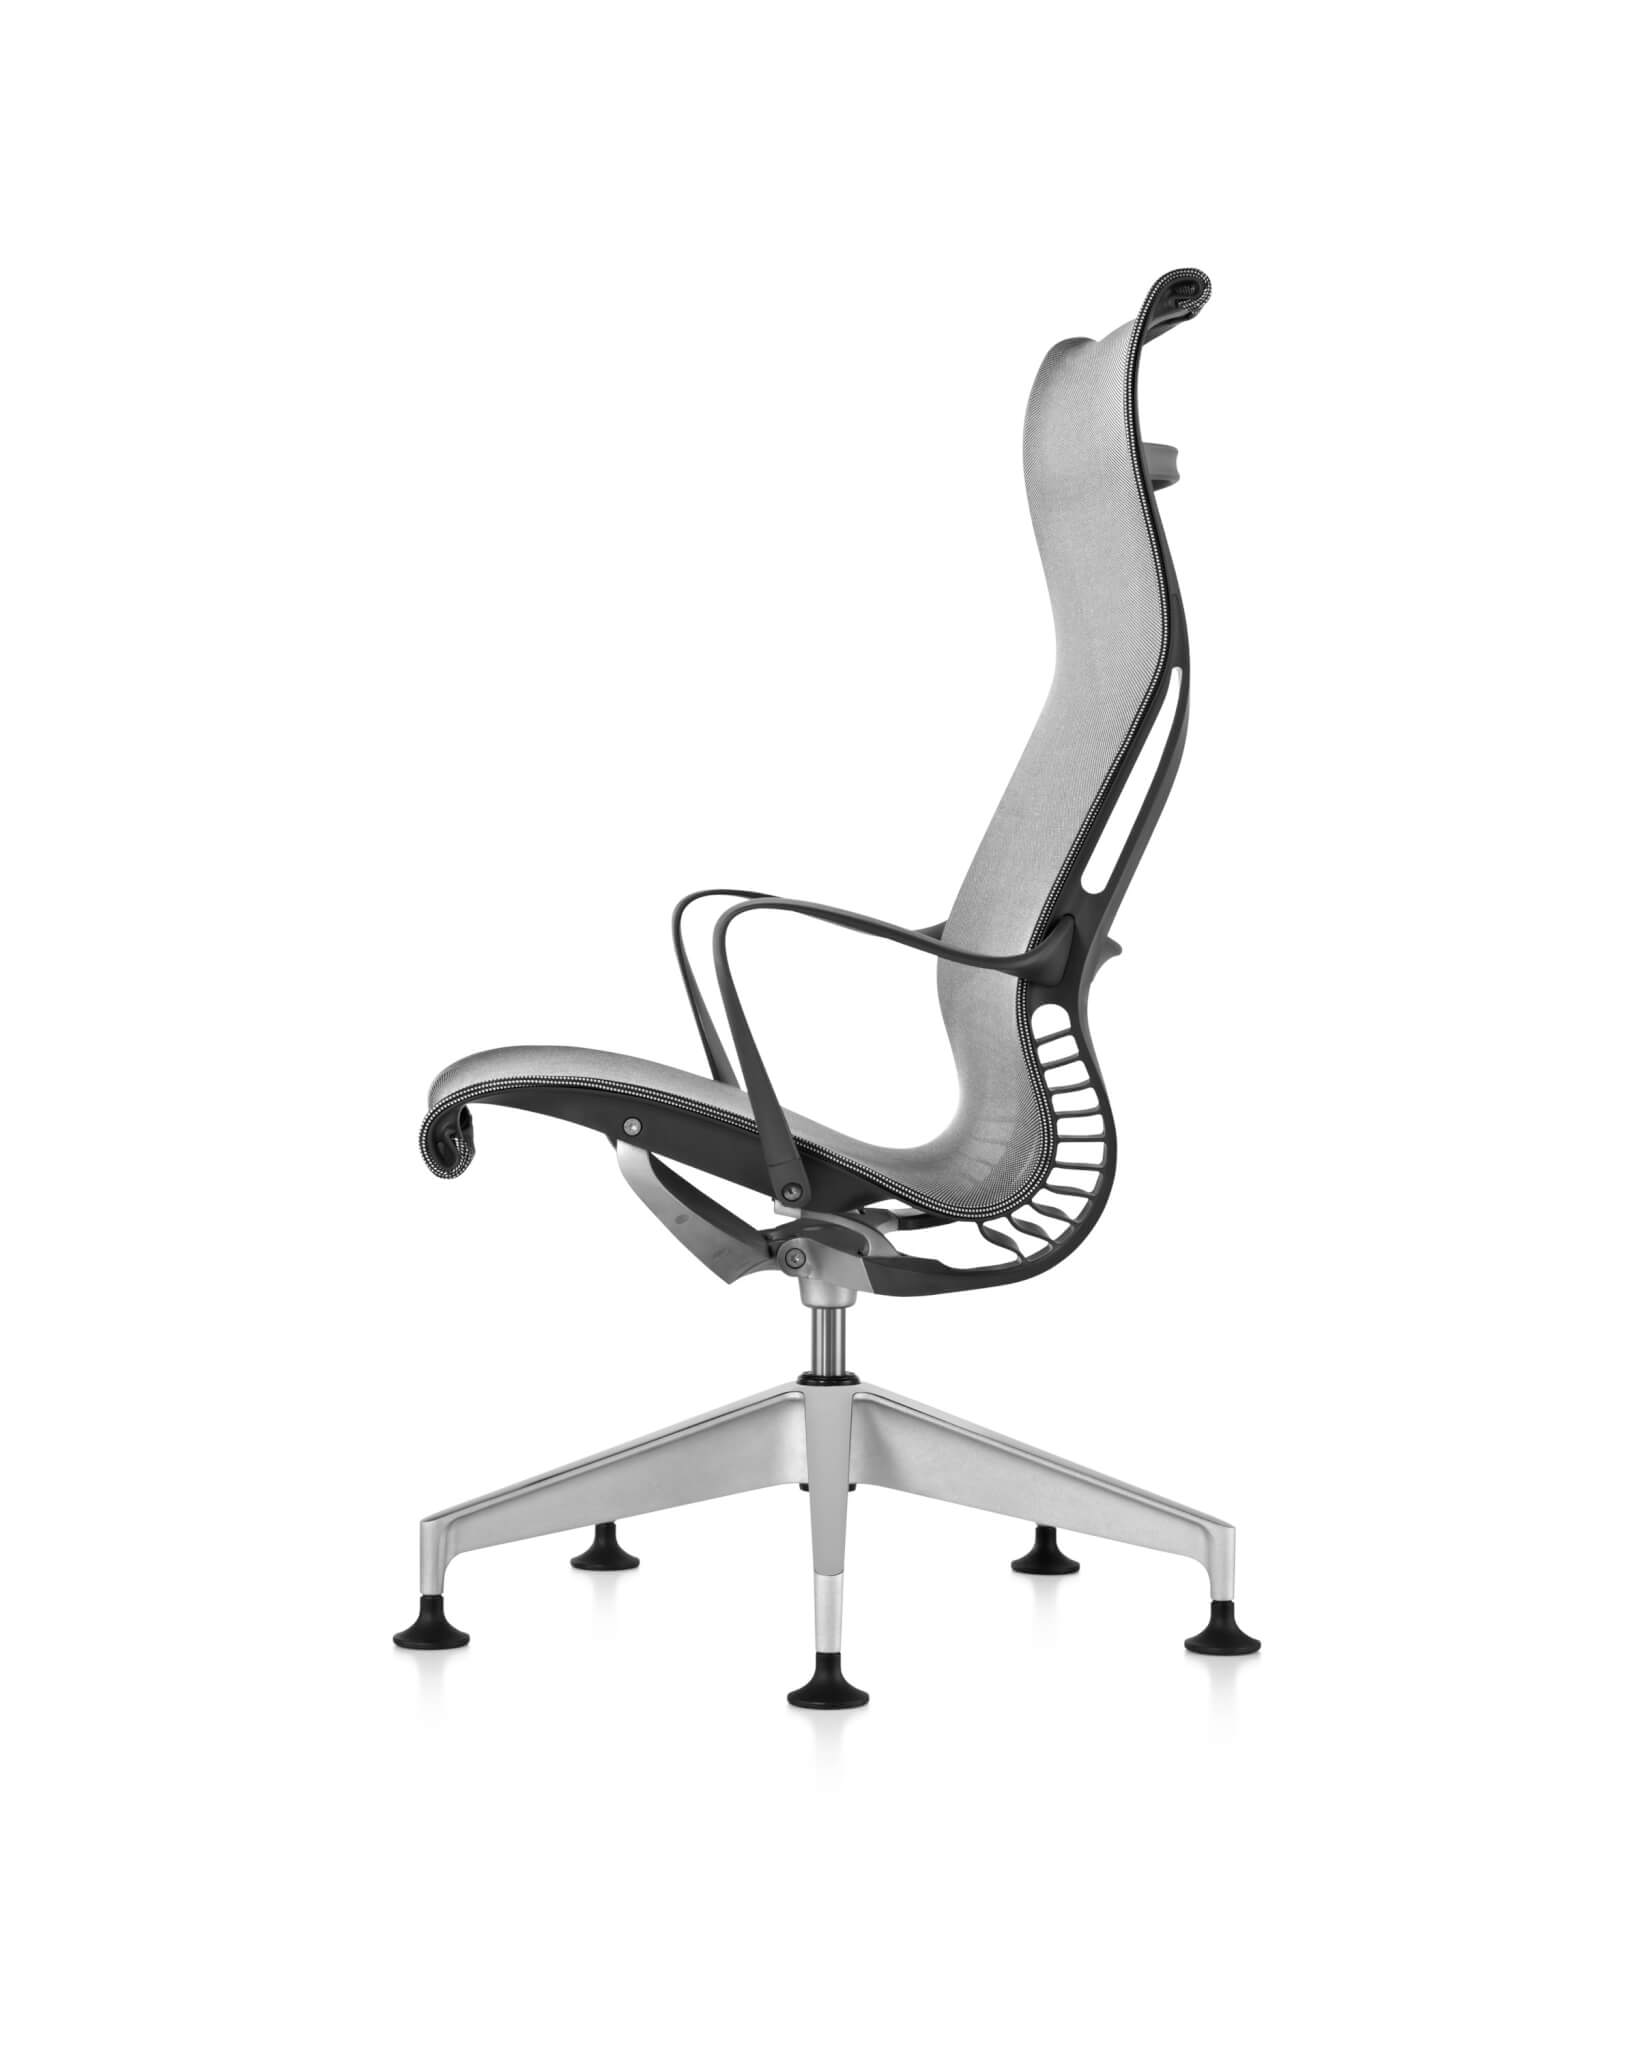 Best Meeting Chair - Setu Chair Review - Ergonomic Chair Central